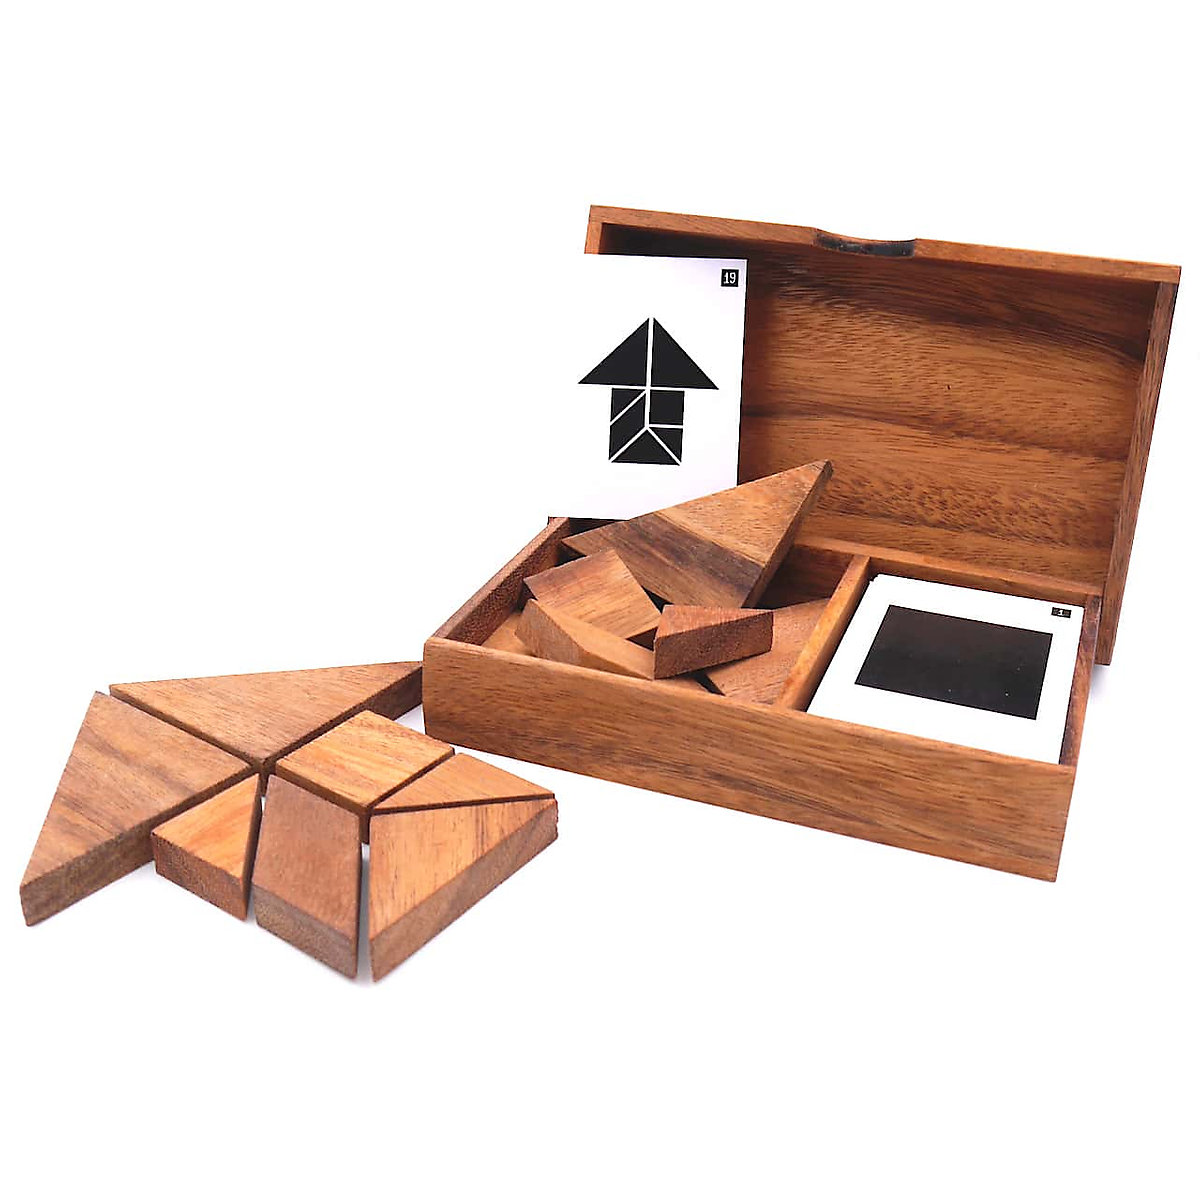 ROMBOL Doppeltangram herausfordernde Variante des Klassikers Tangram für 2 Personen aus Holz